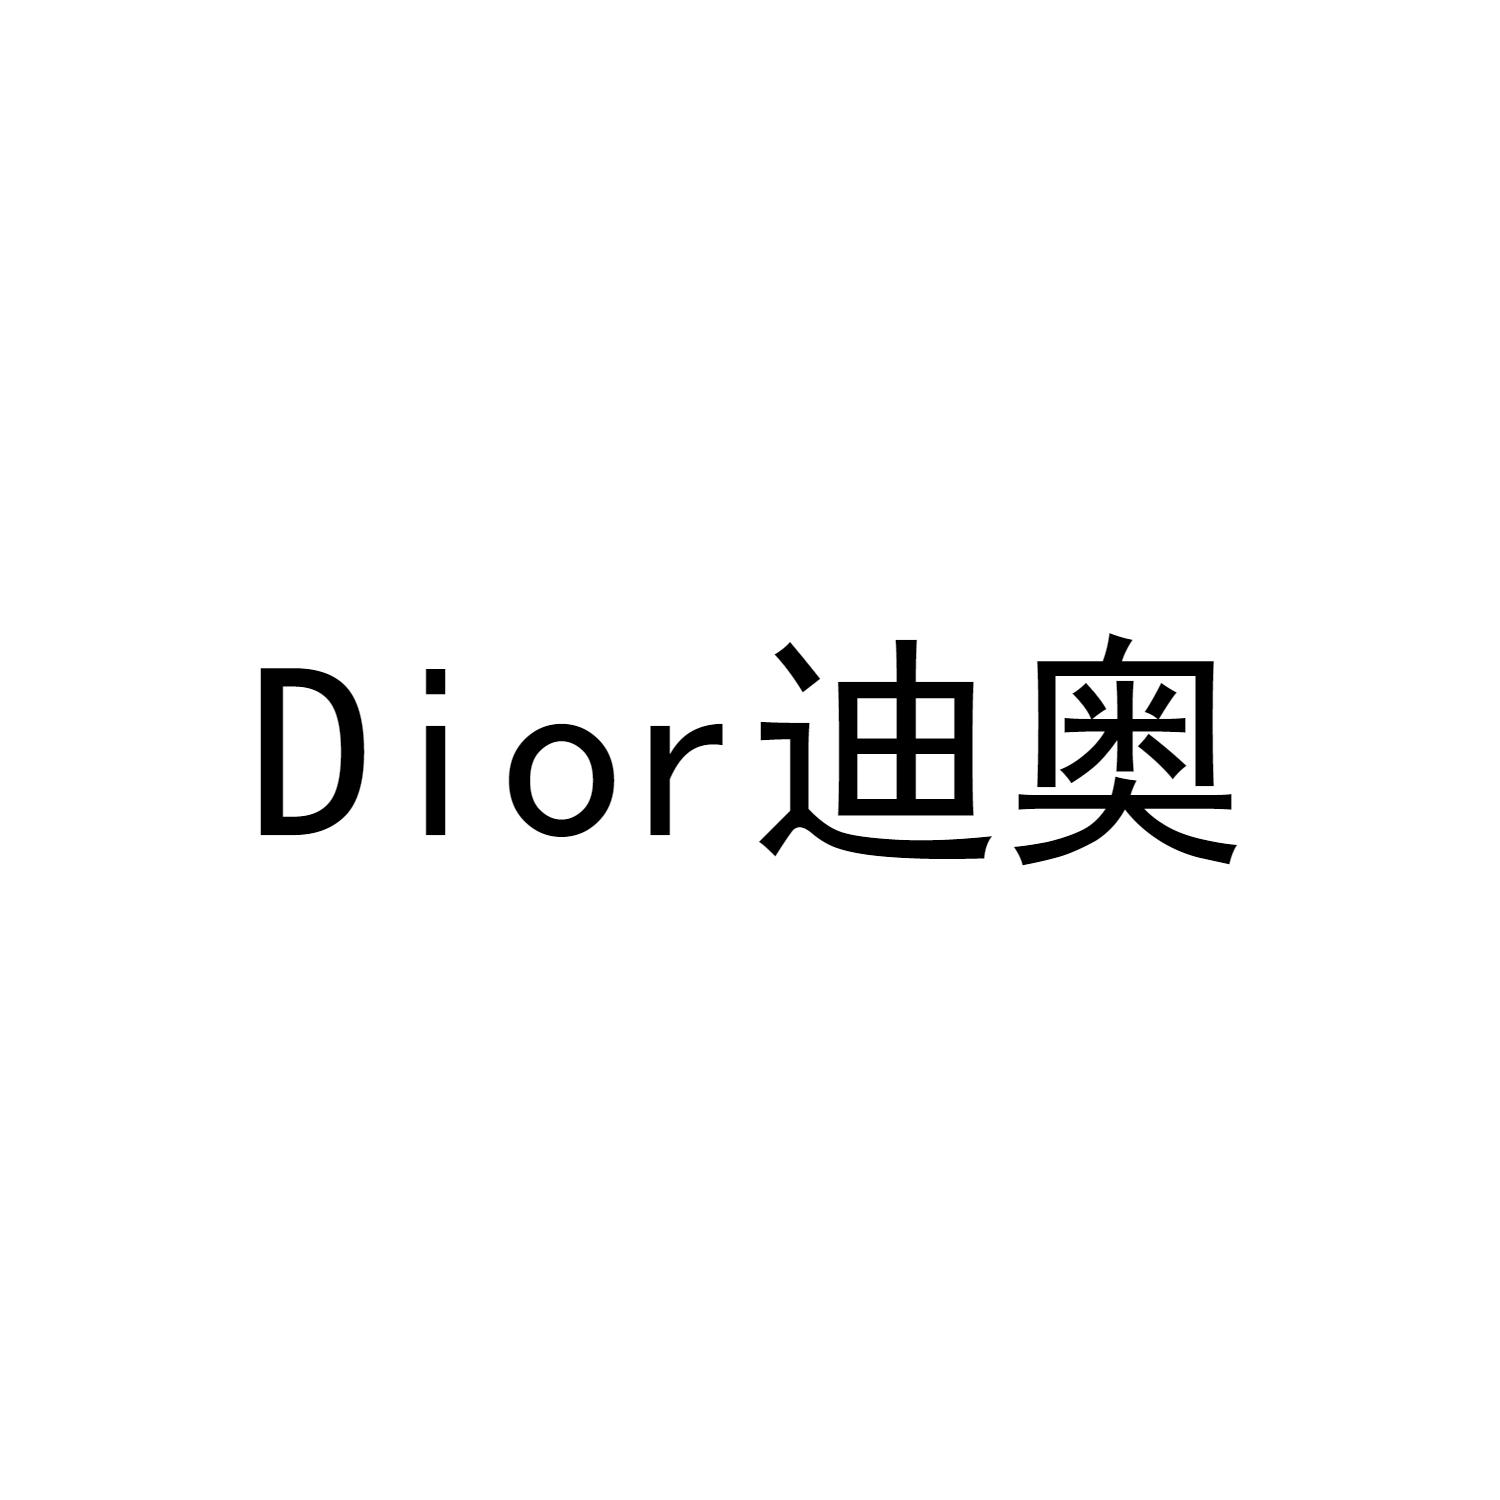 迪奥 dior 商标公告